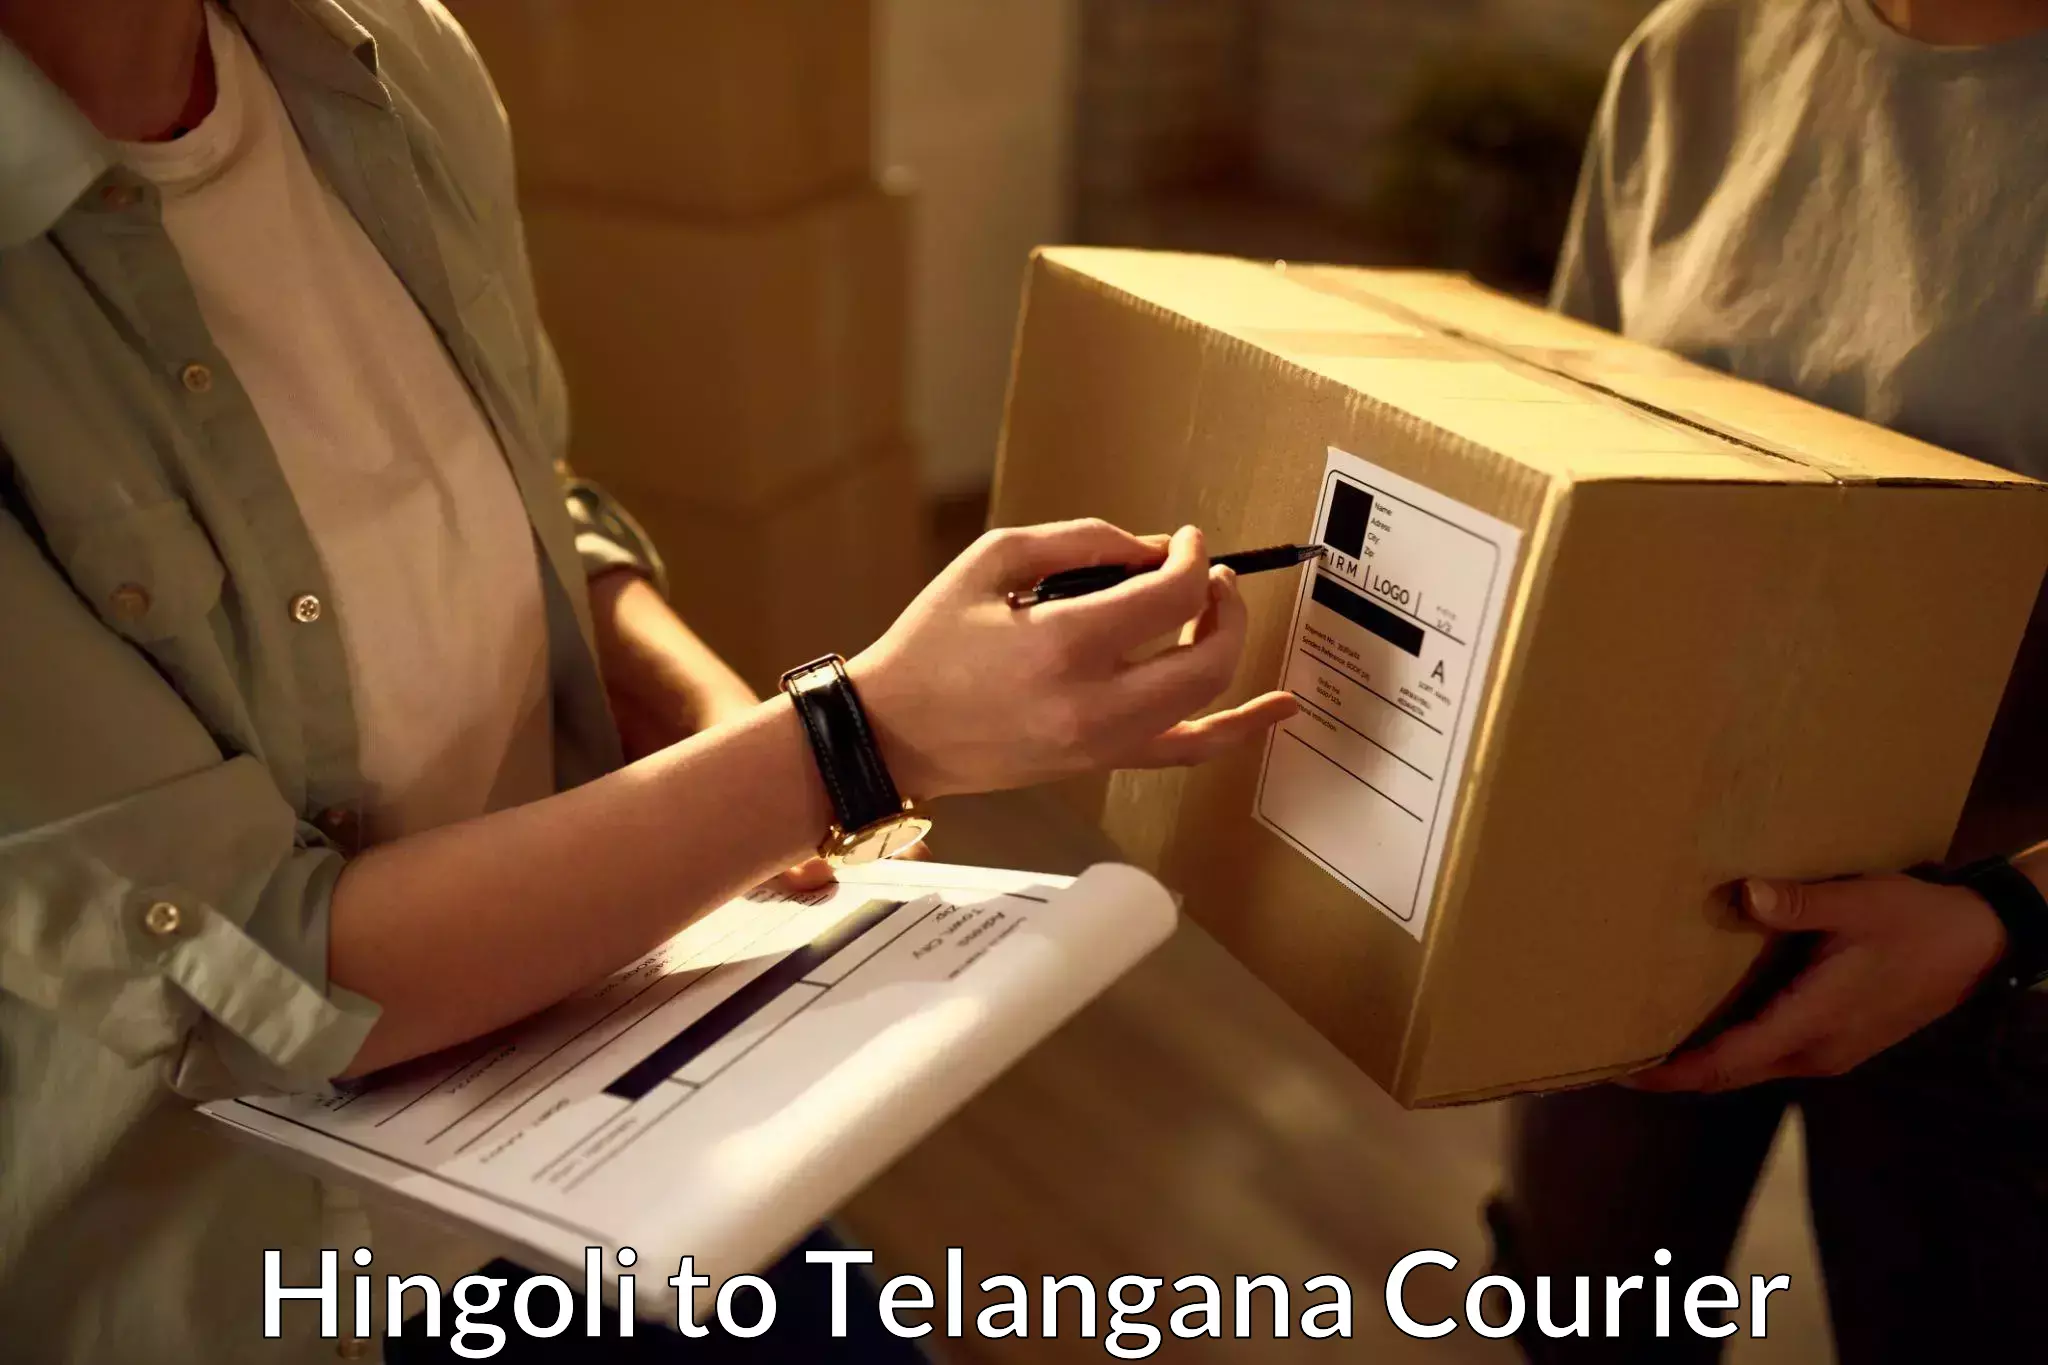 Delivery service partnership Hingoli to Gangadhara